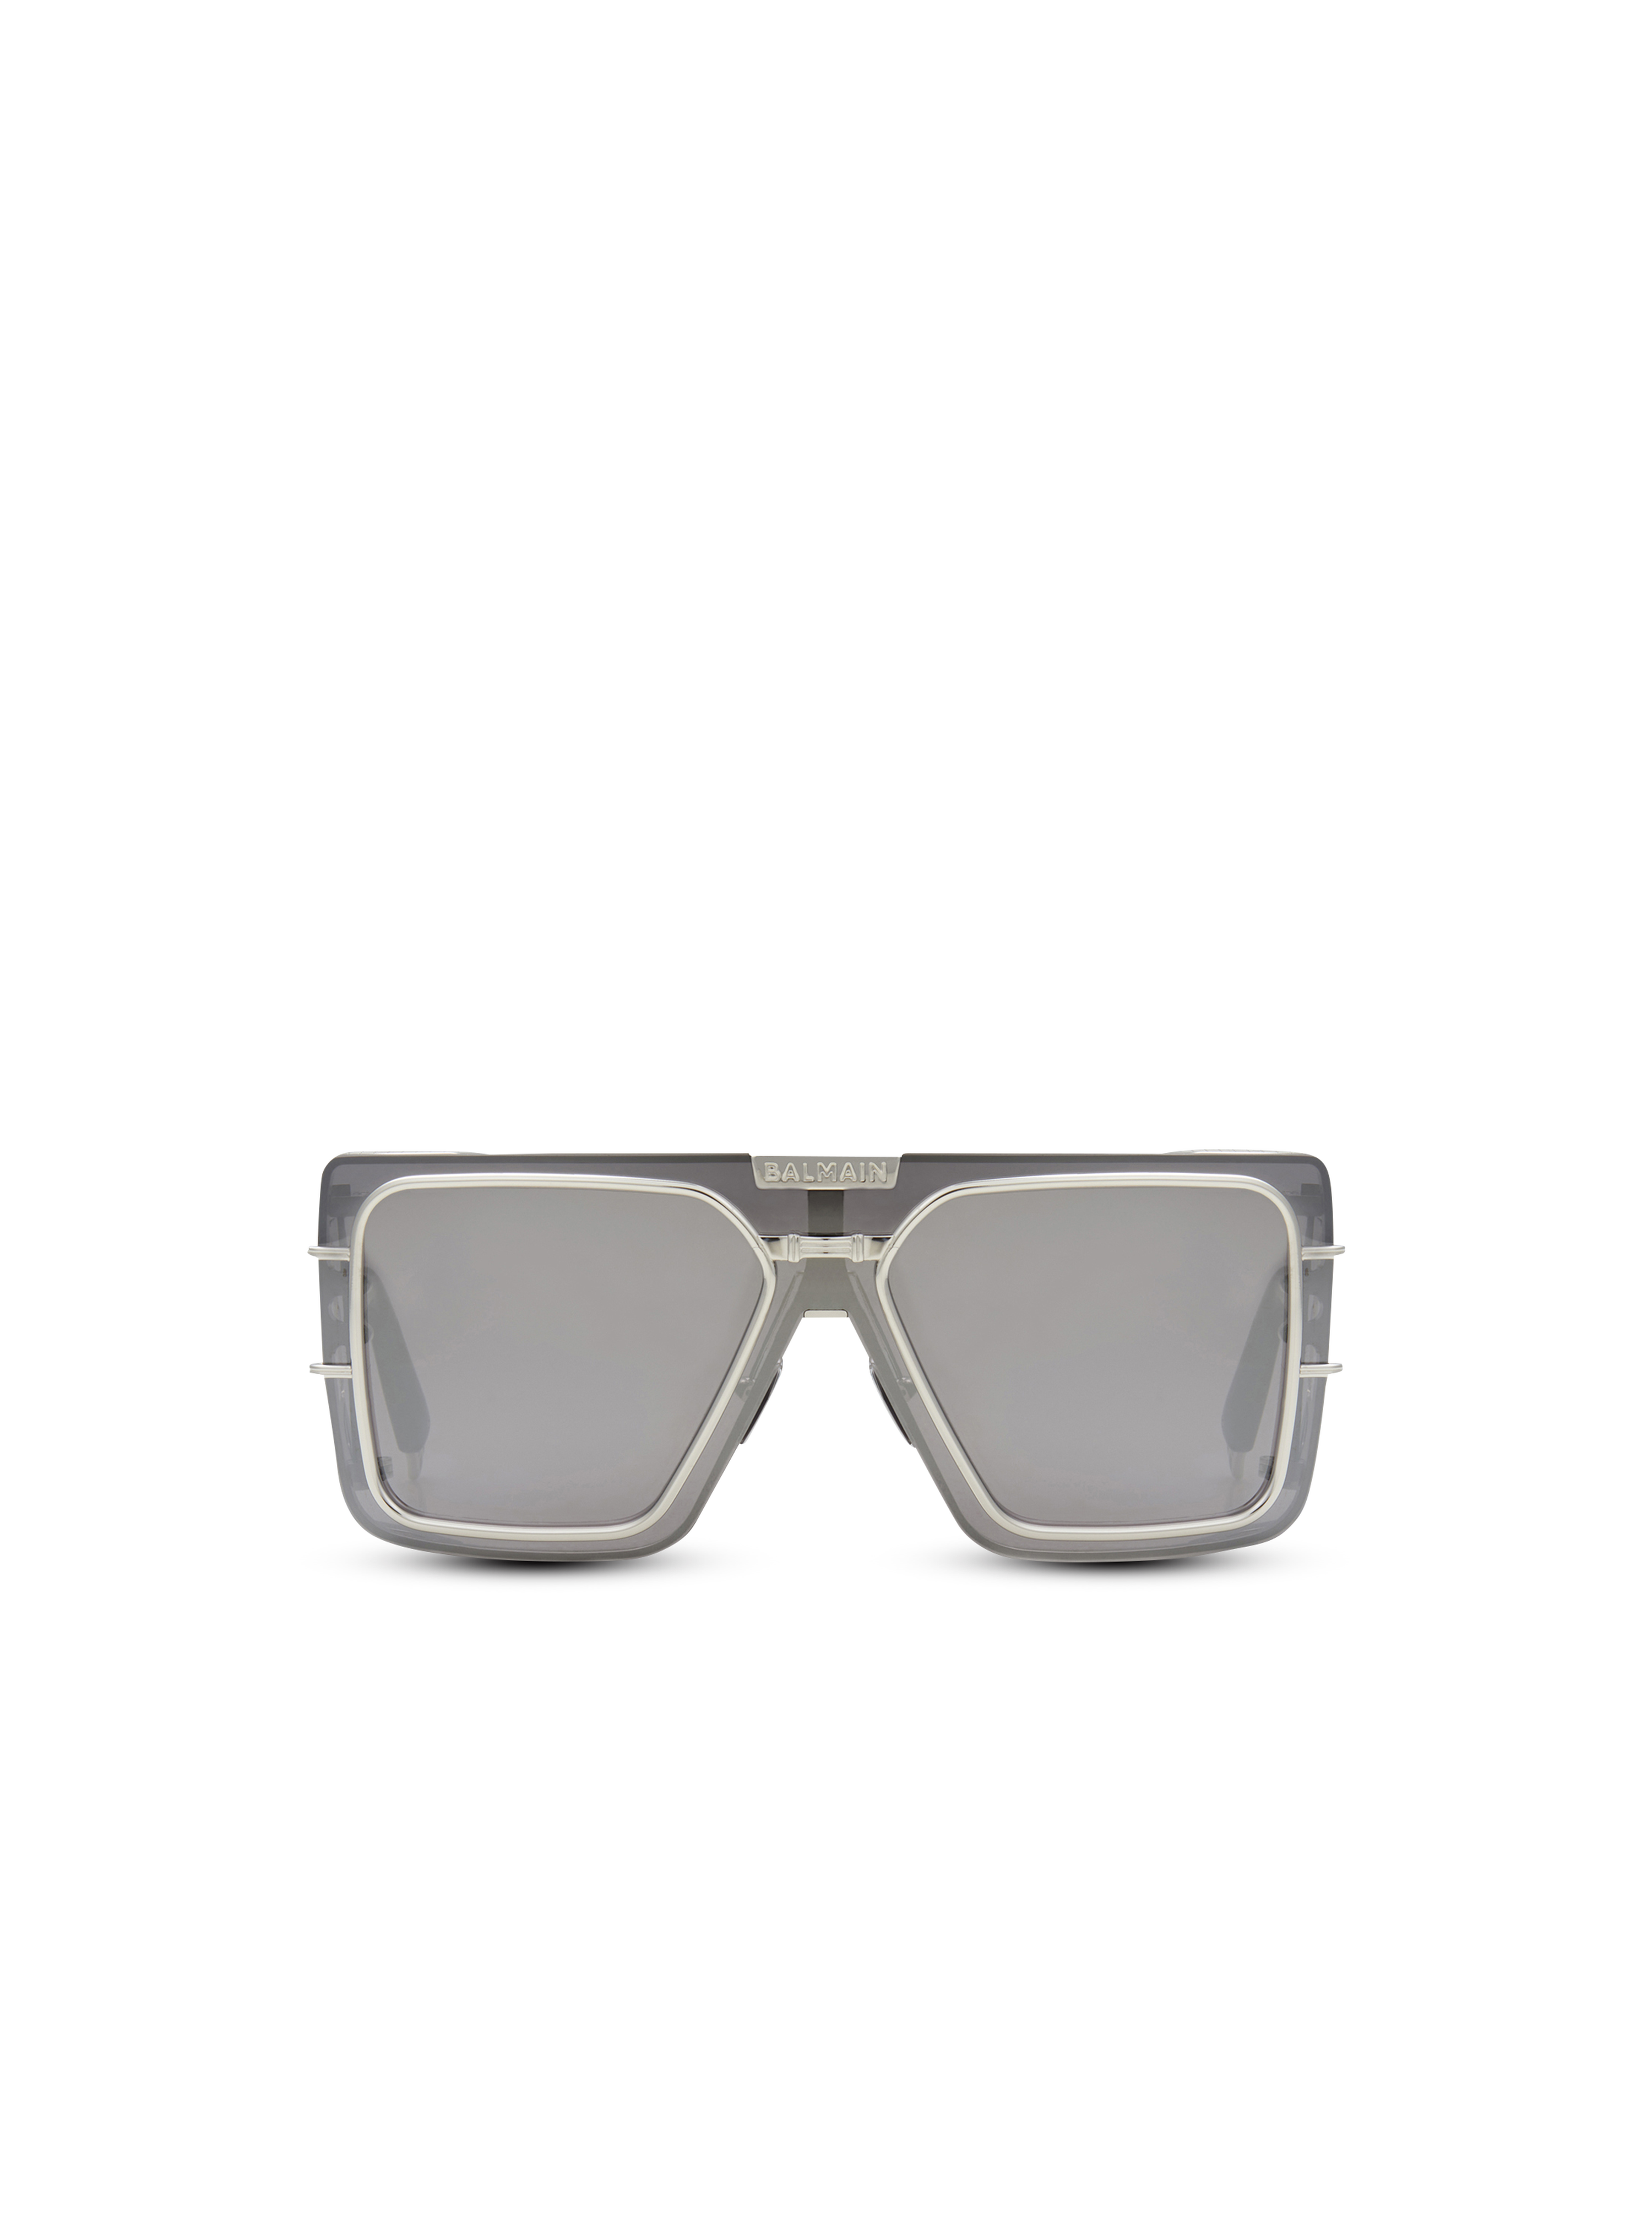 Shield-Sonnenbrille „Wonder Boy” aus Titan, grau